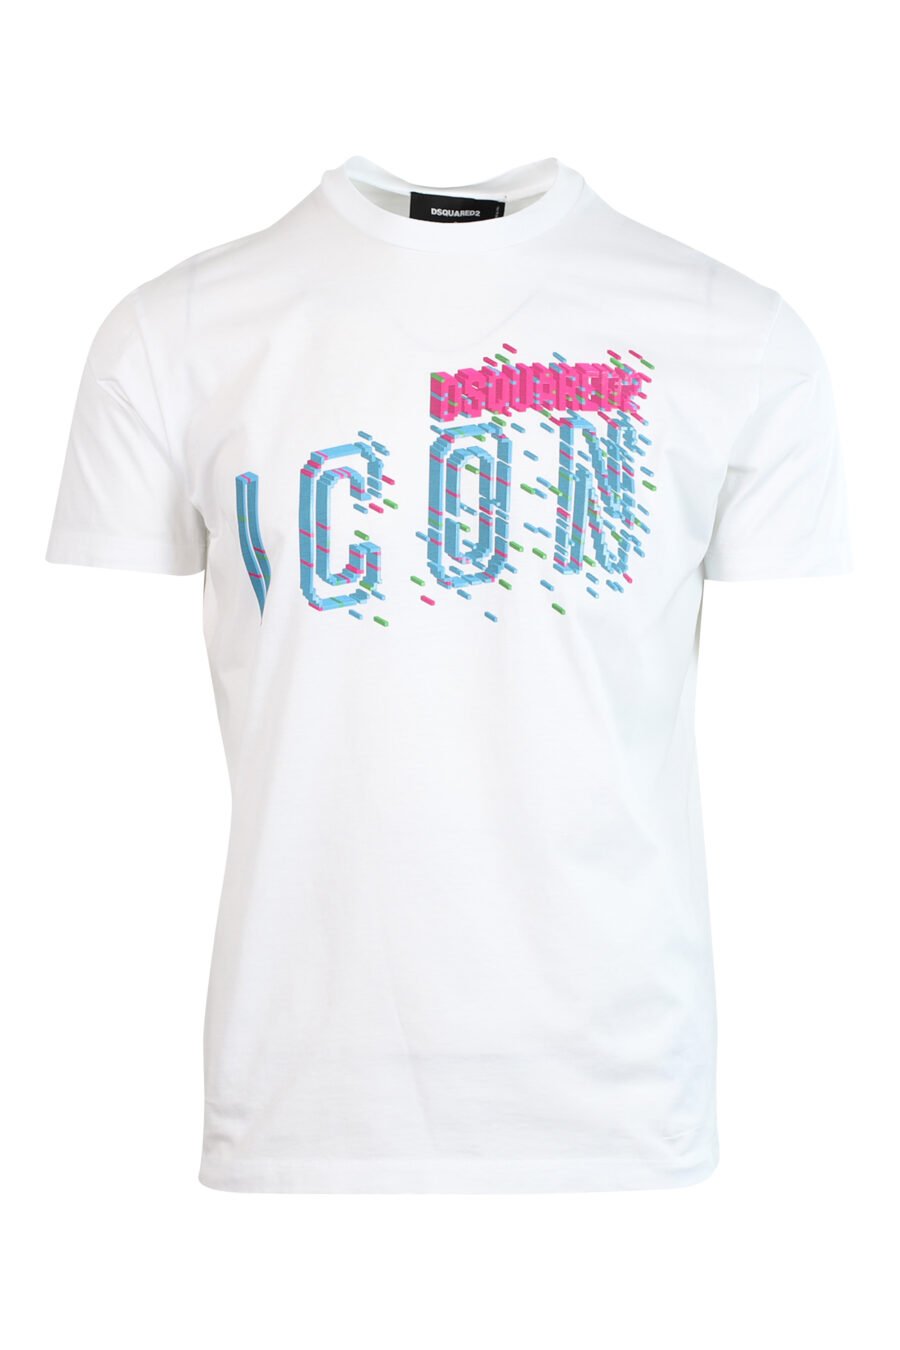 T-shirt blanc avec maxilogo "icon pixeled" turquoise et fuchsia - 8052134981191